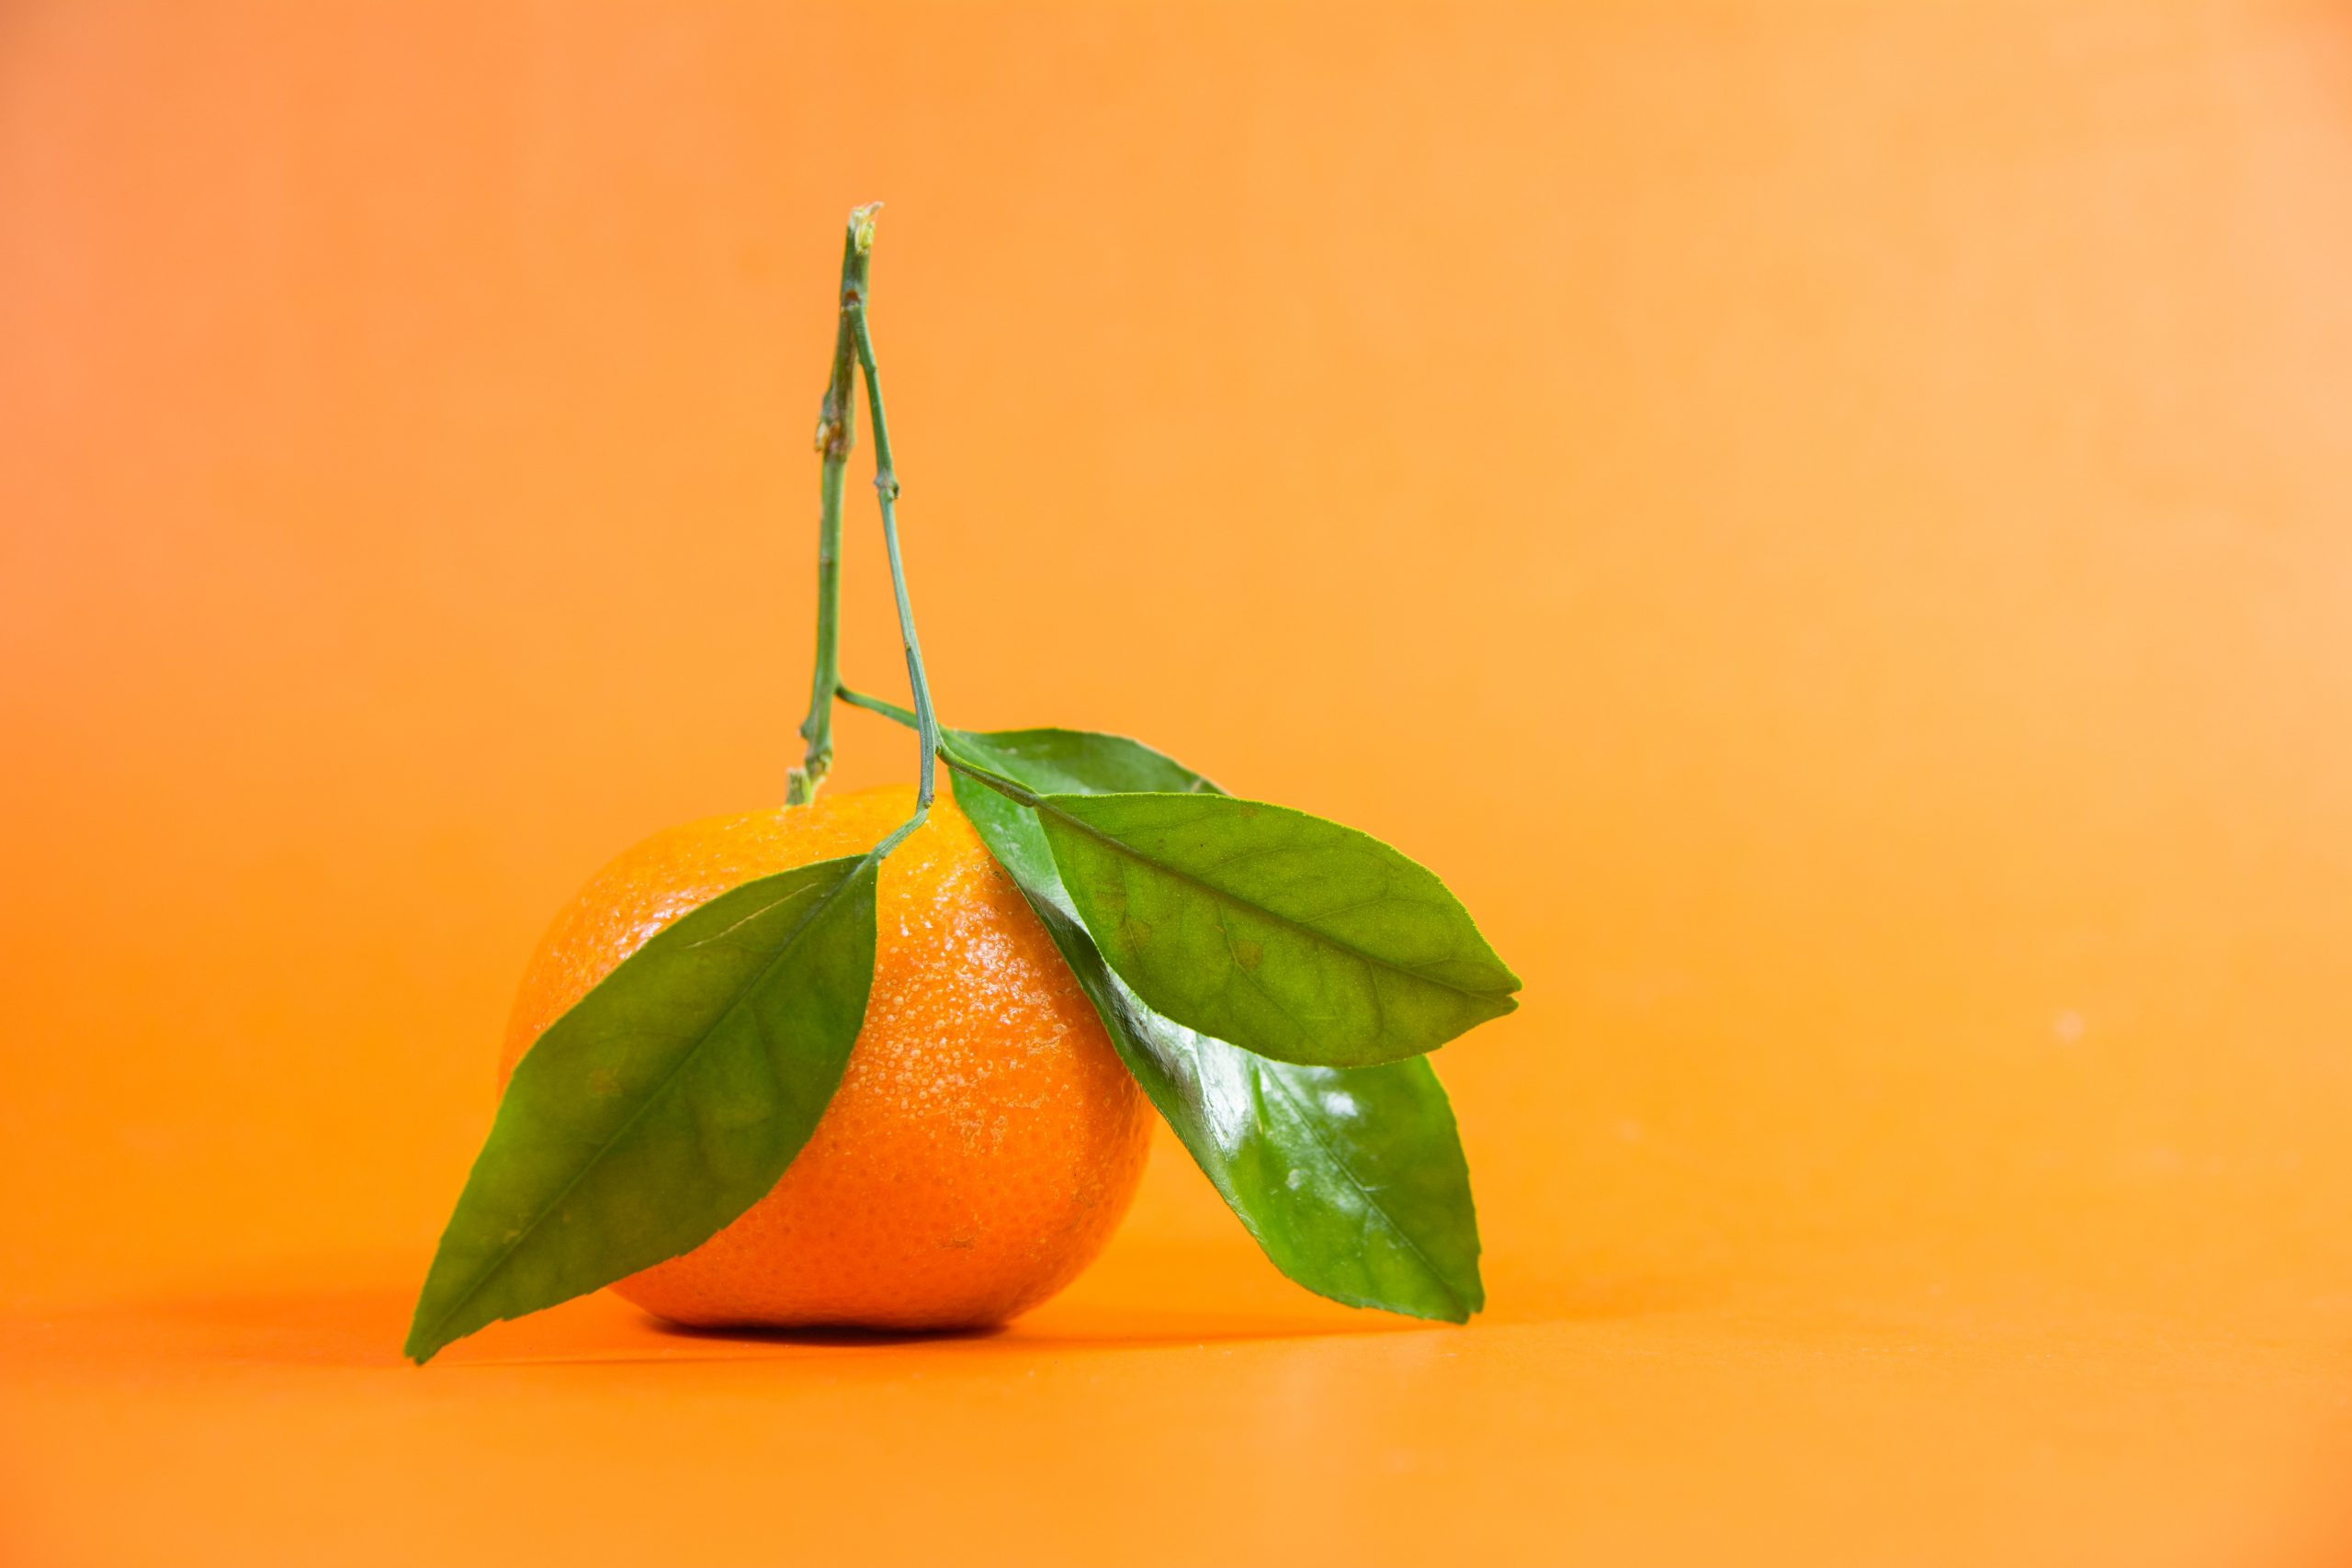 An Orange - fruit high in vitamin C